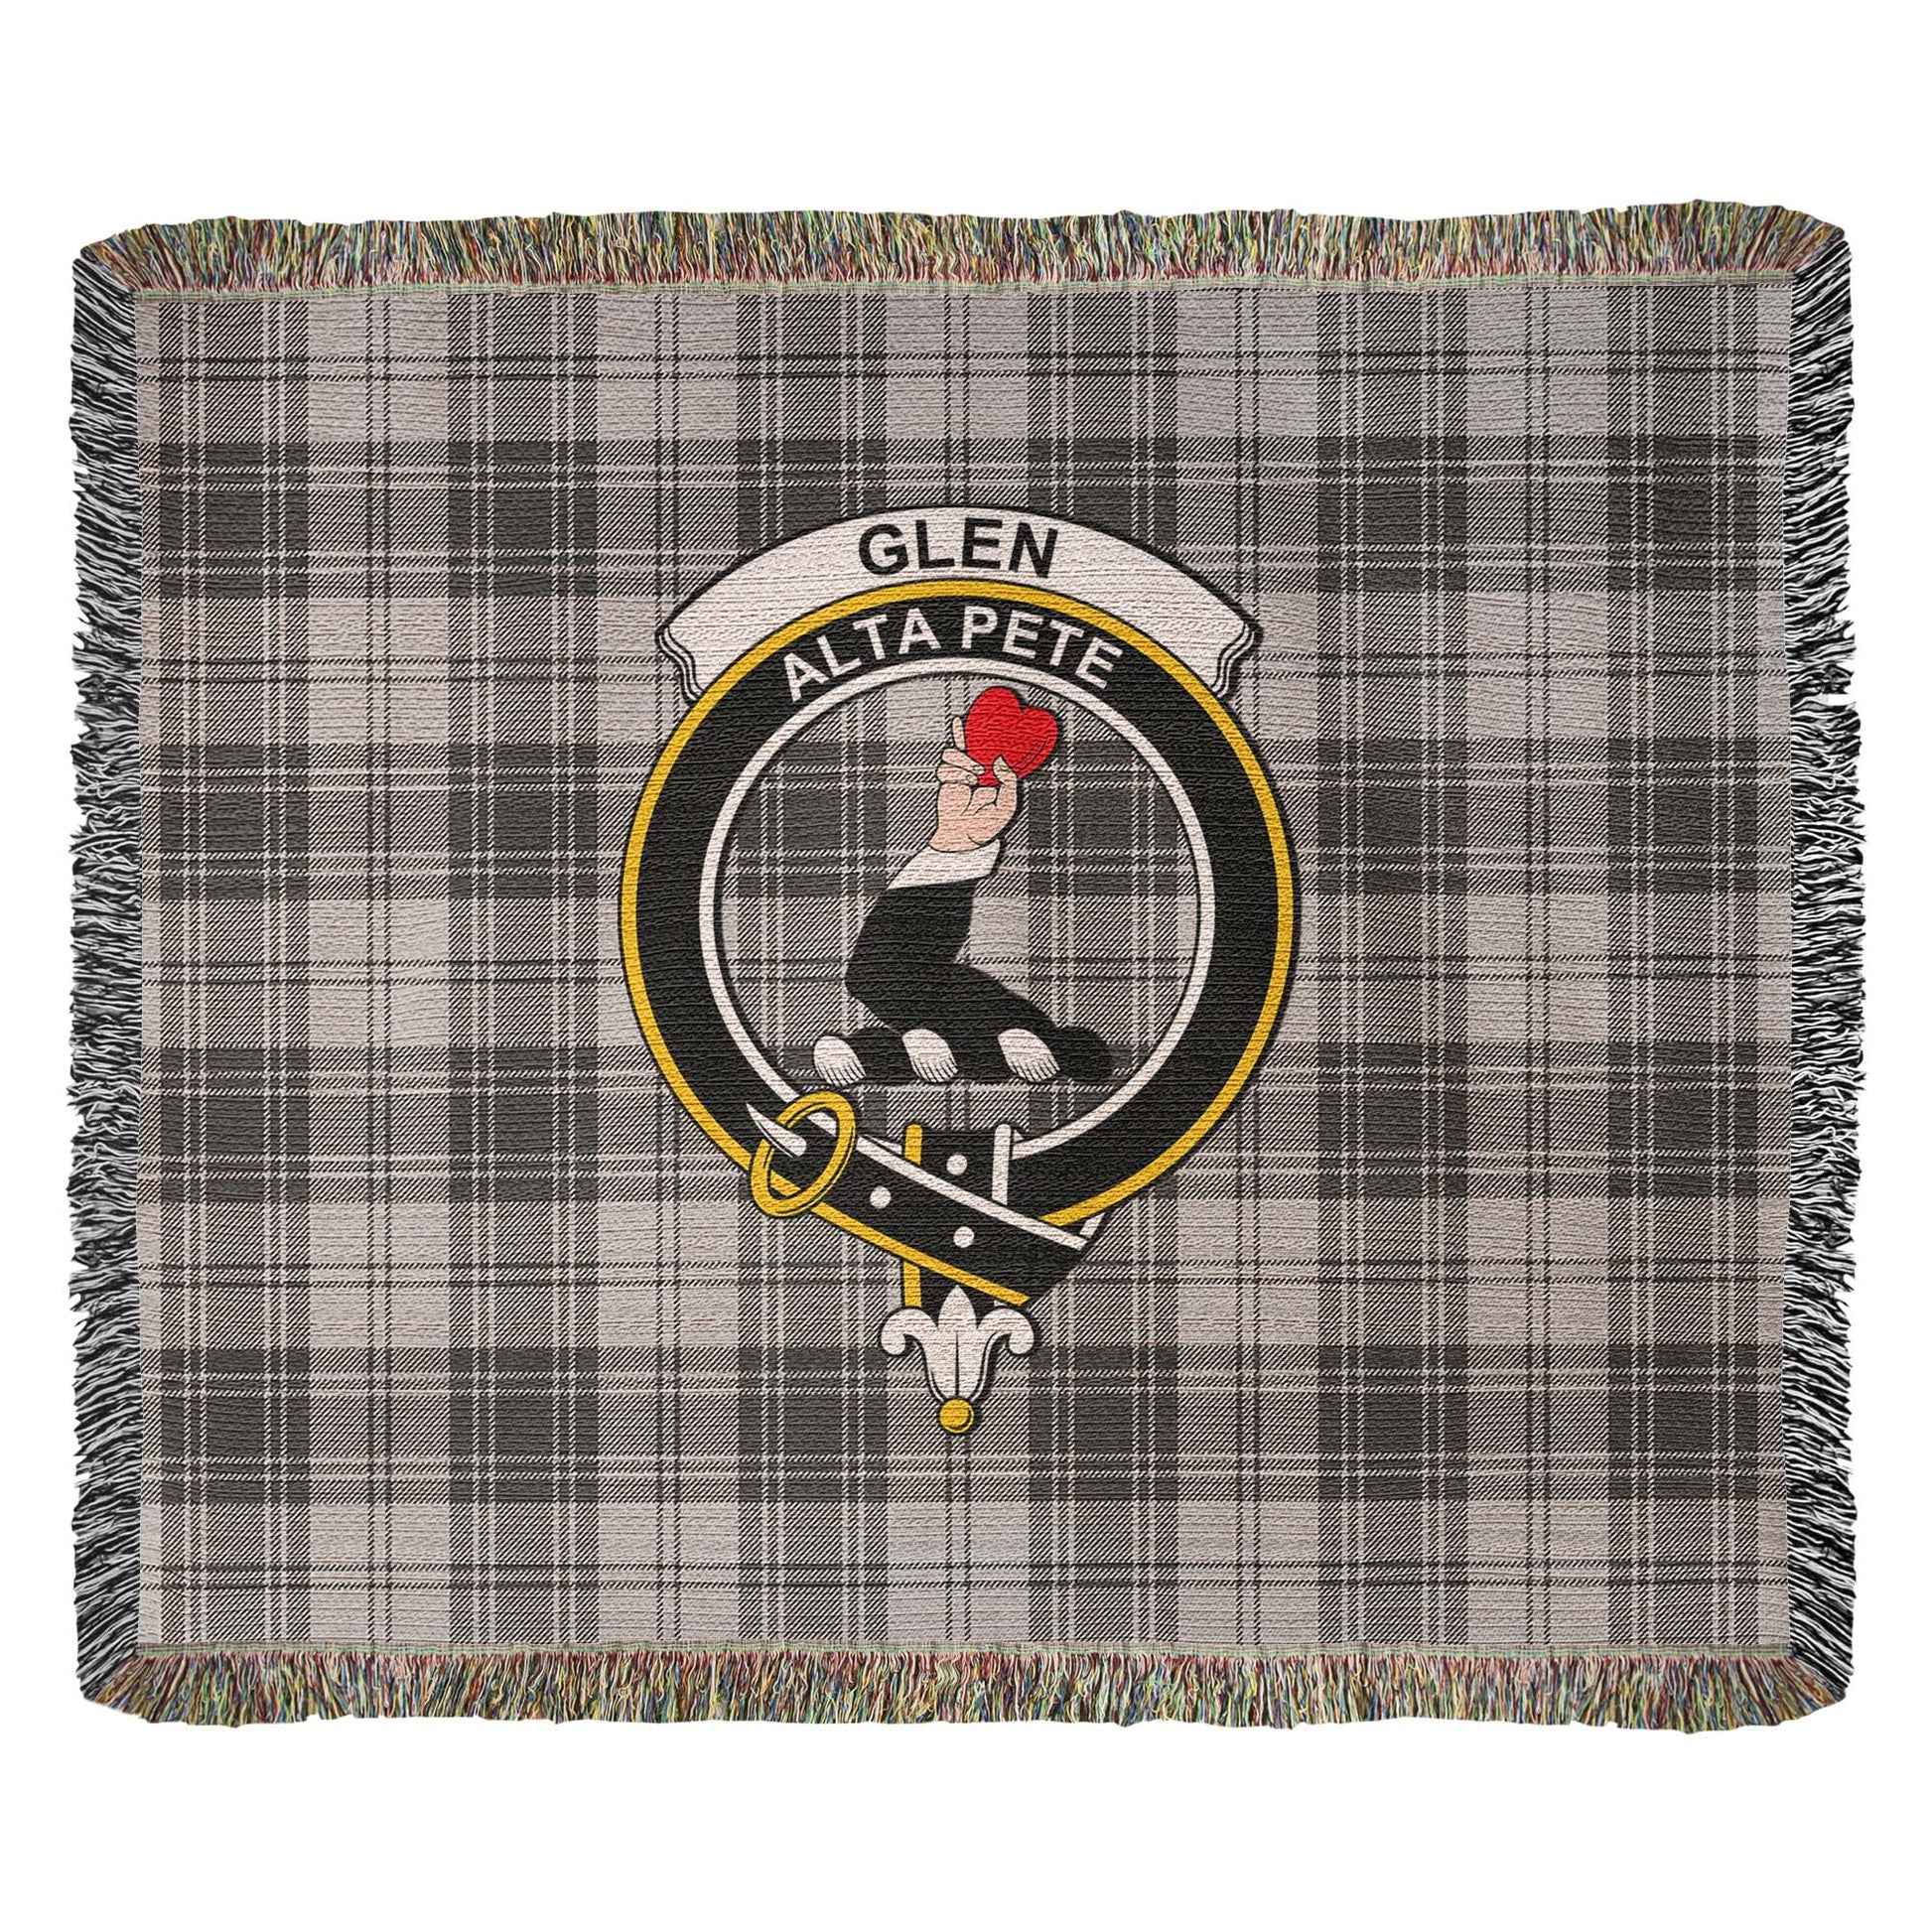 Tartan Vibes Clothing Glen Tartan Woven Blanket with Family Crest